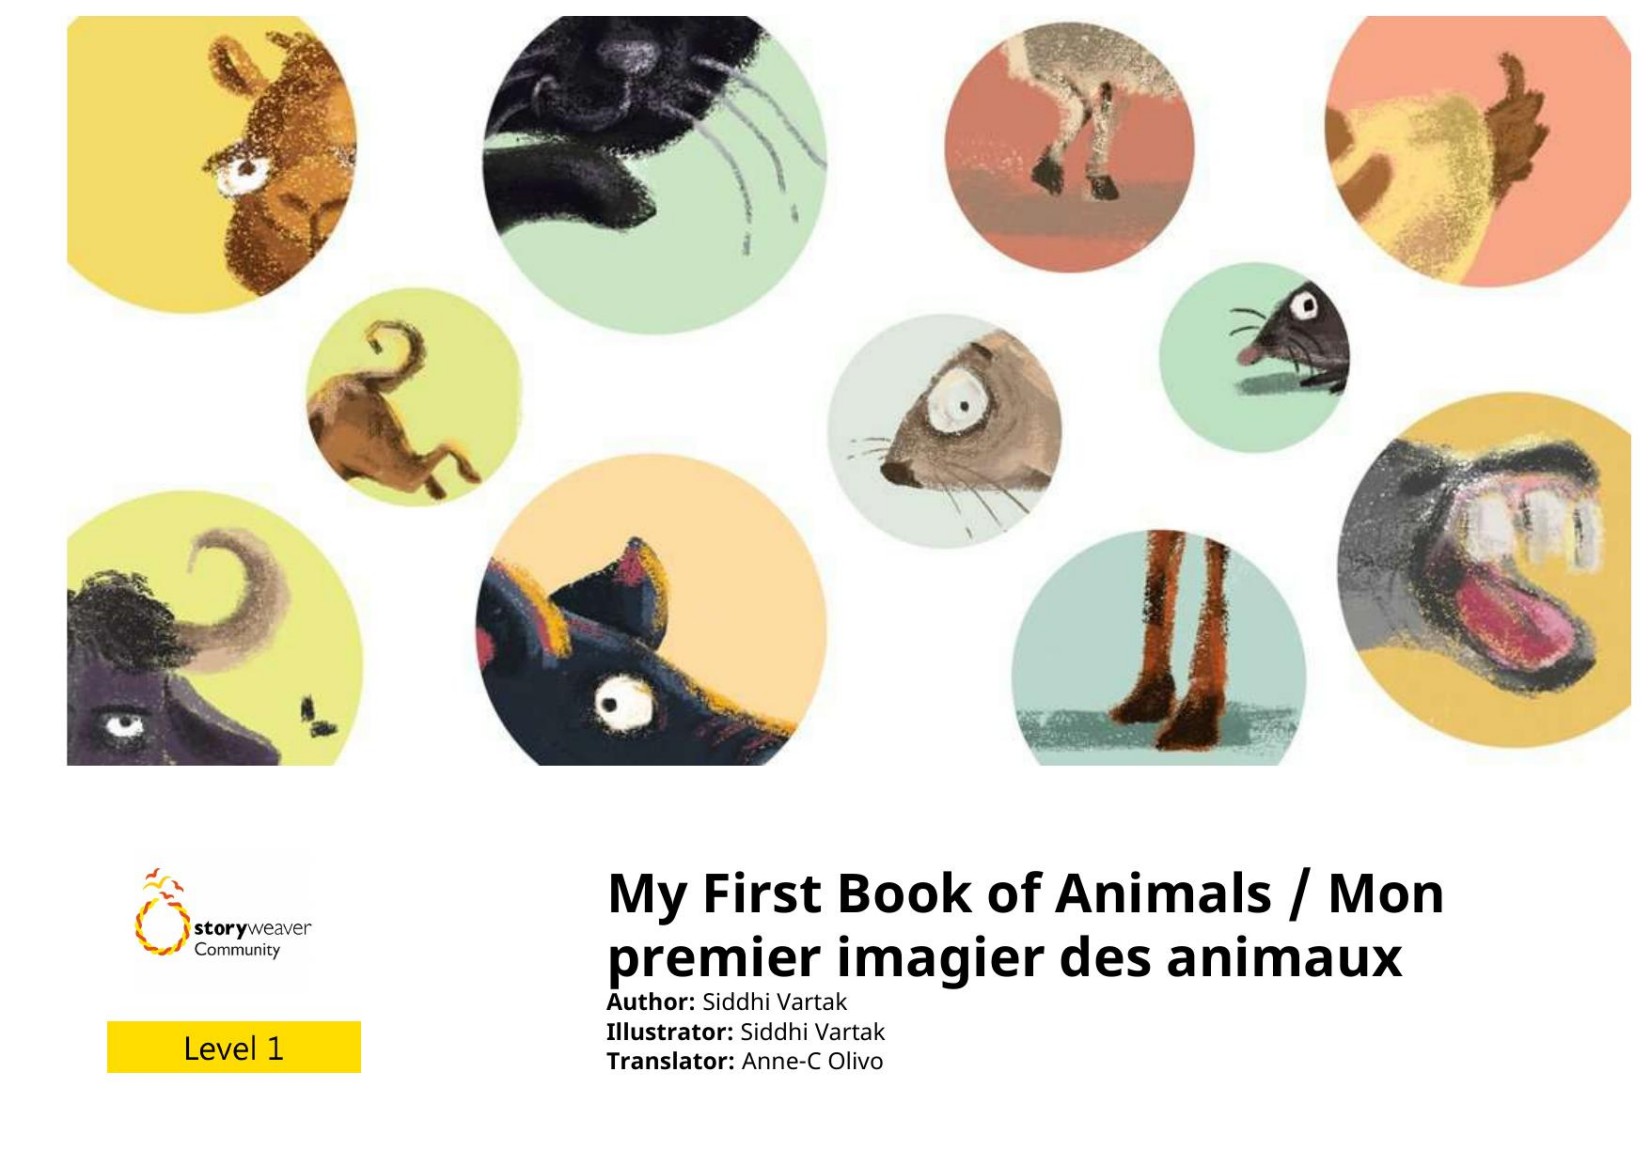 My First Book of Animals / Mon premier imagier des animaux